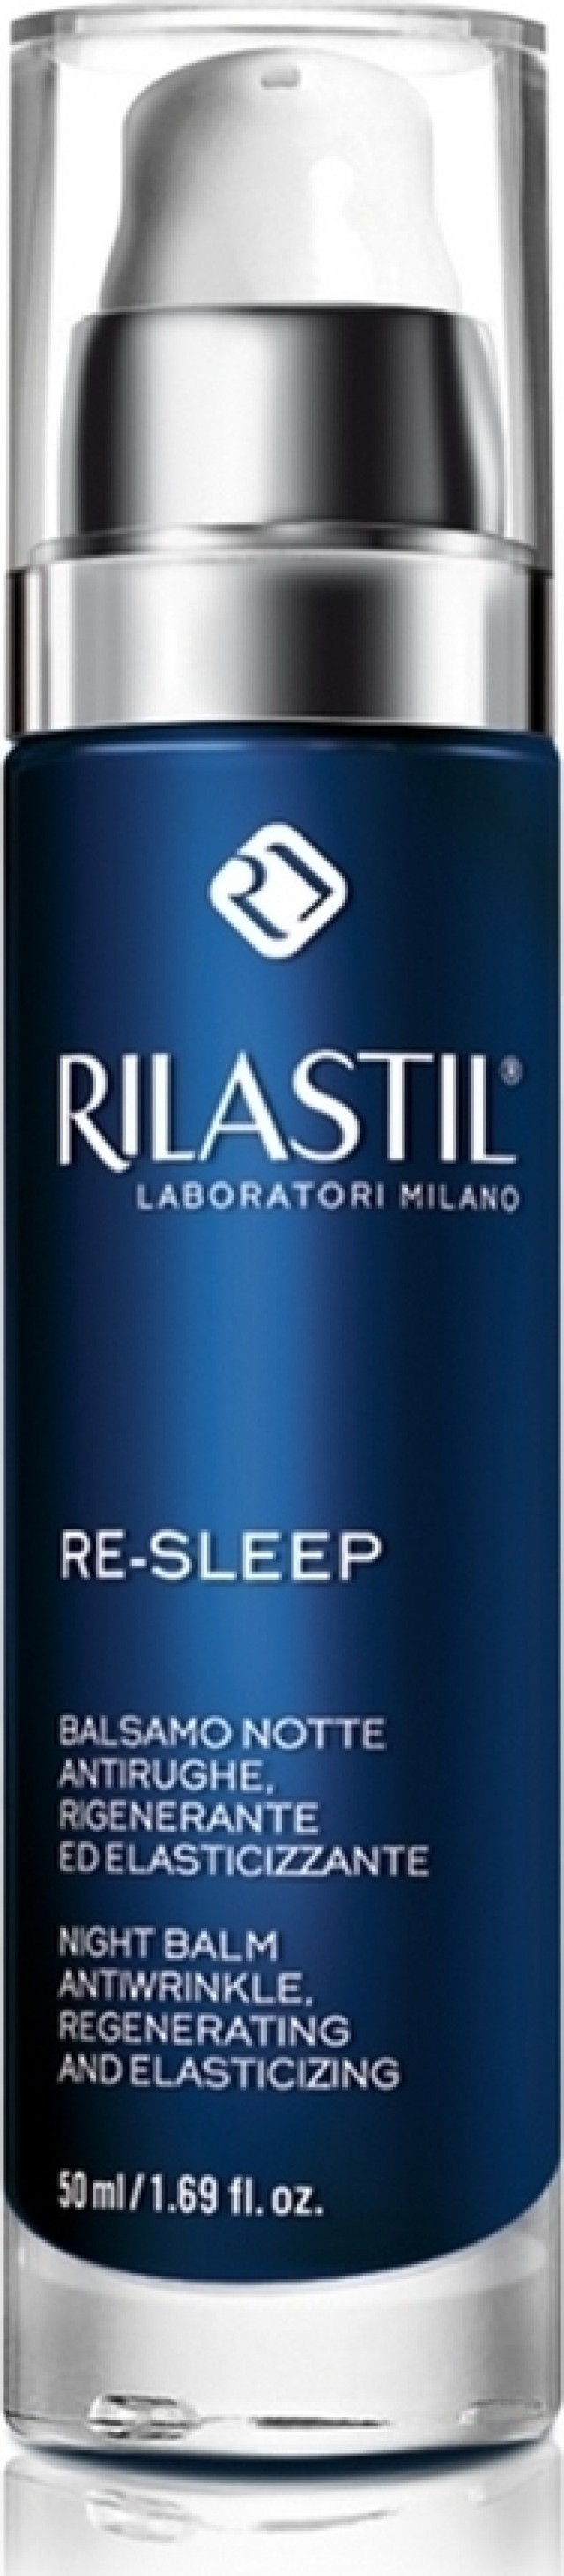 Rilastil Re-Sleep Night Balm Πλούσιο Γαλάκτωμα Προσώπου Νύχτας, για όλους τους τύπους επιδερμίδας & για όλες τις ηλικίες, 50ml